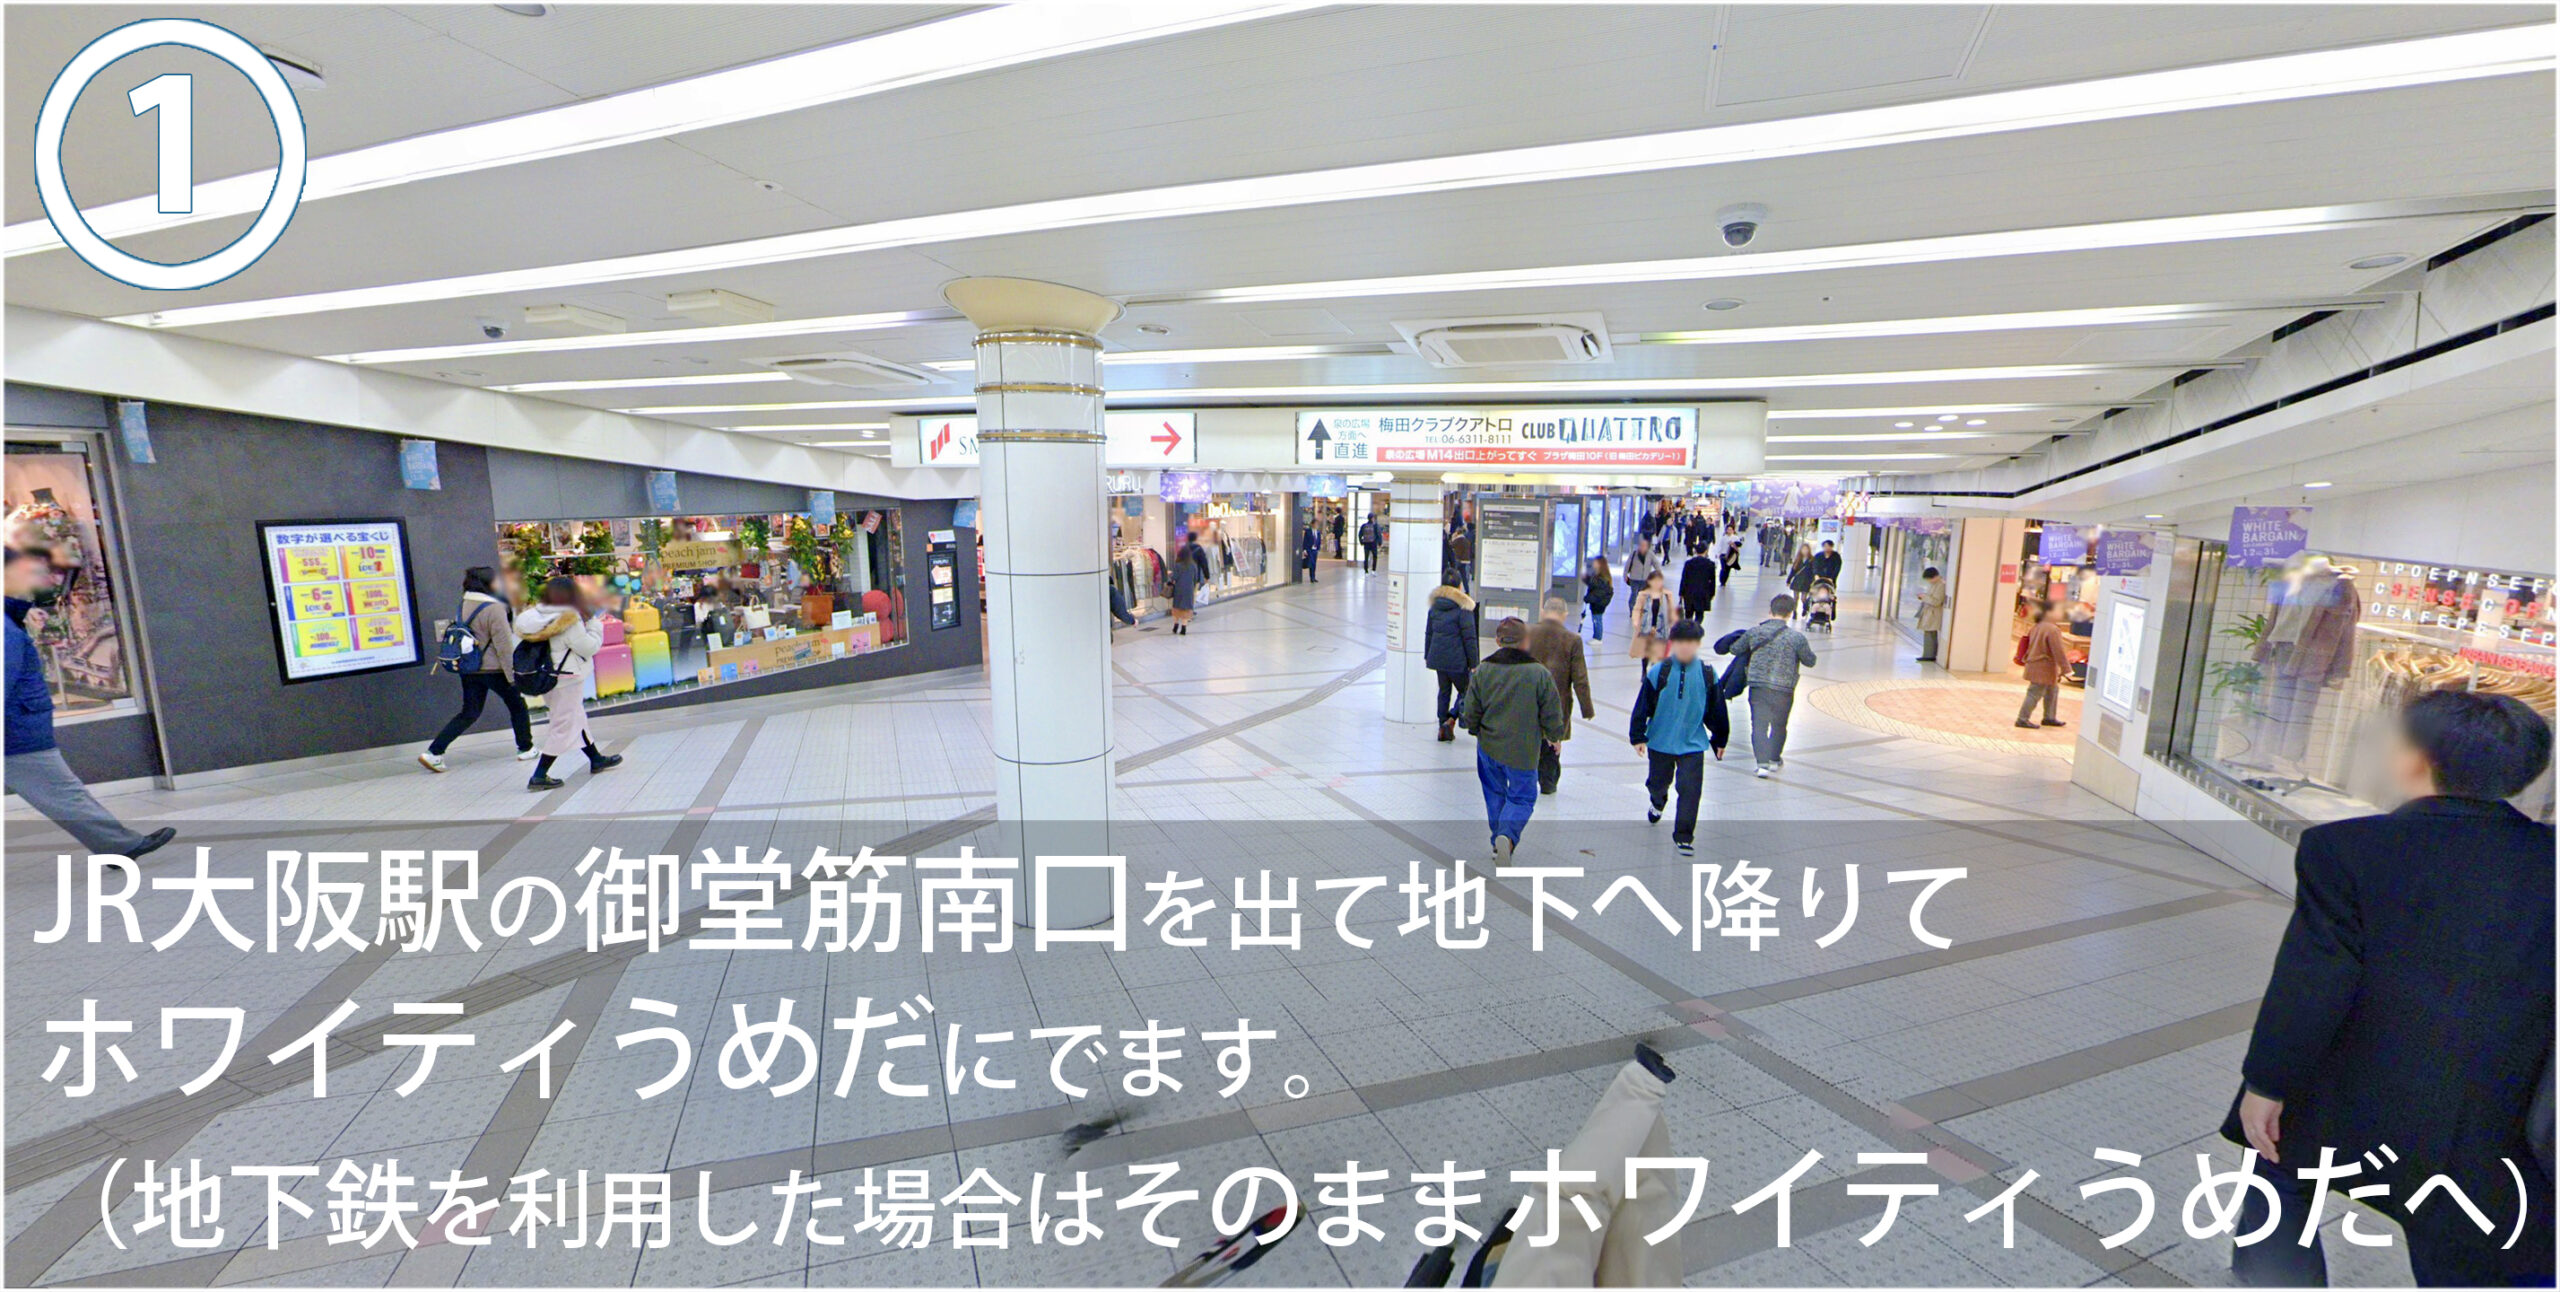 JR大阪駅の御堂筋南口を出て地下へ降りてホワイティうめだにでます。